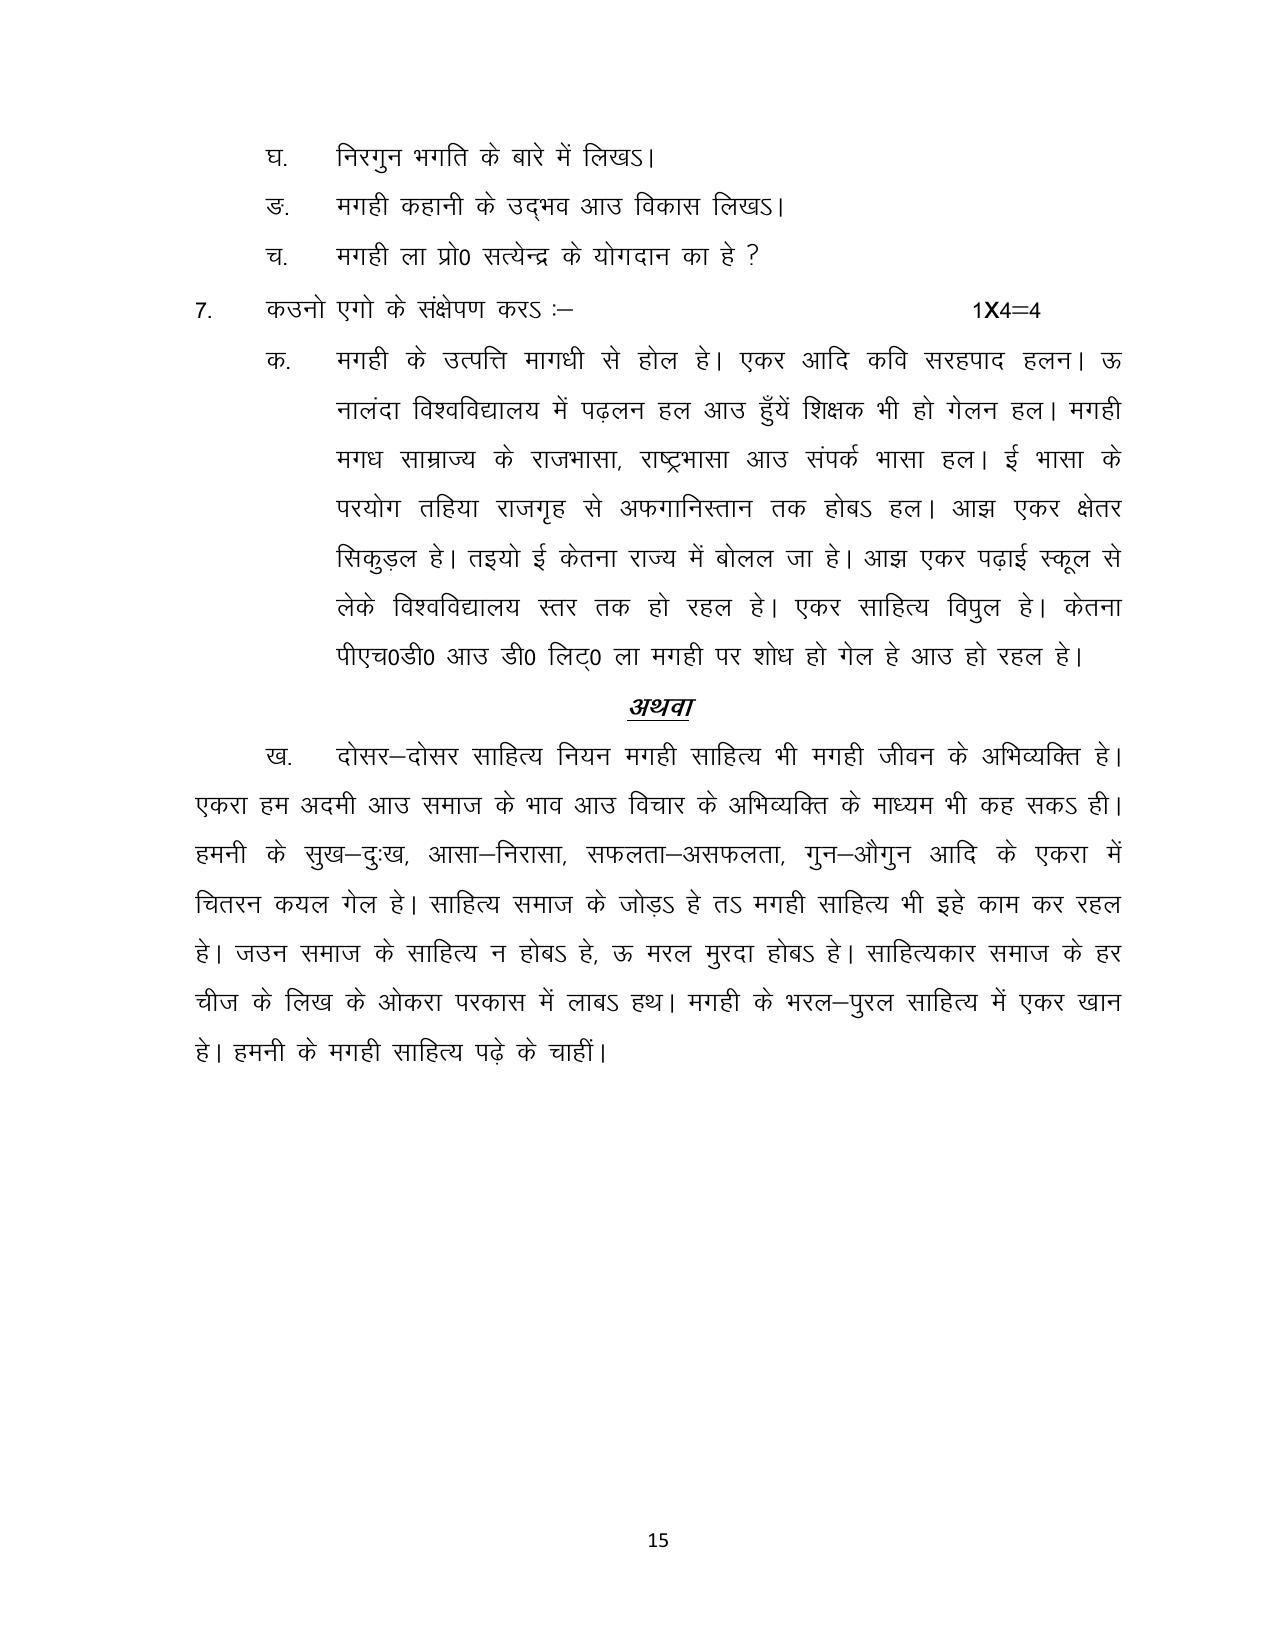 Bihar Board Class 12 Magahi Model Paper - Page 15